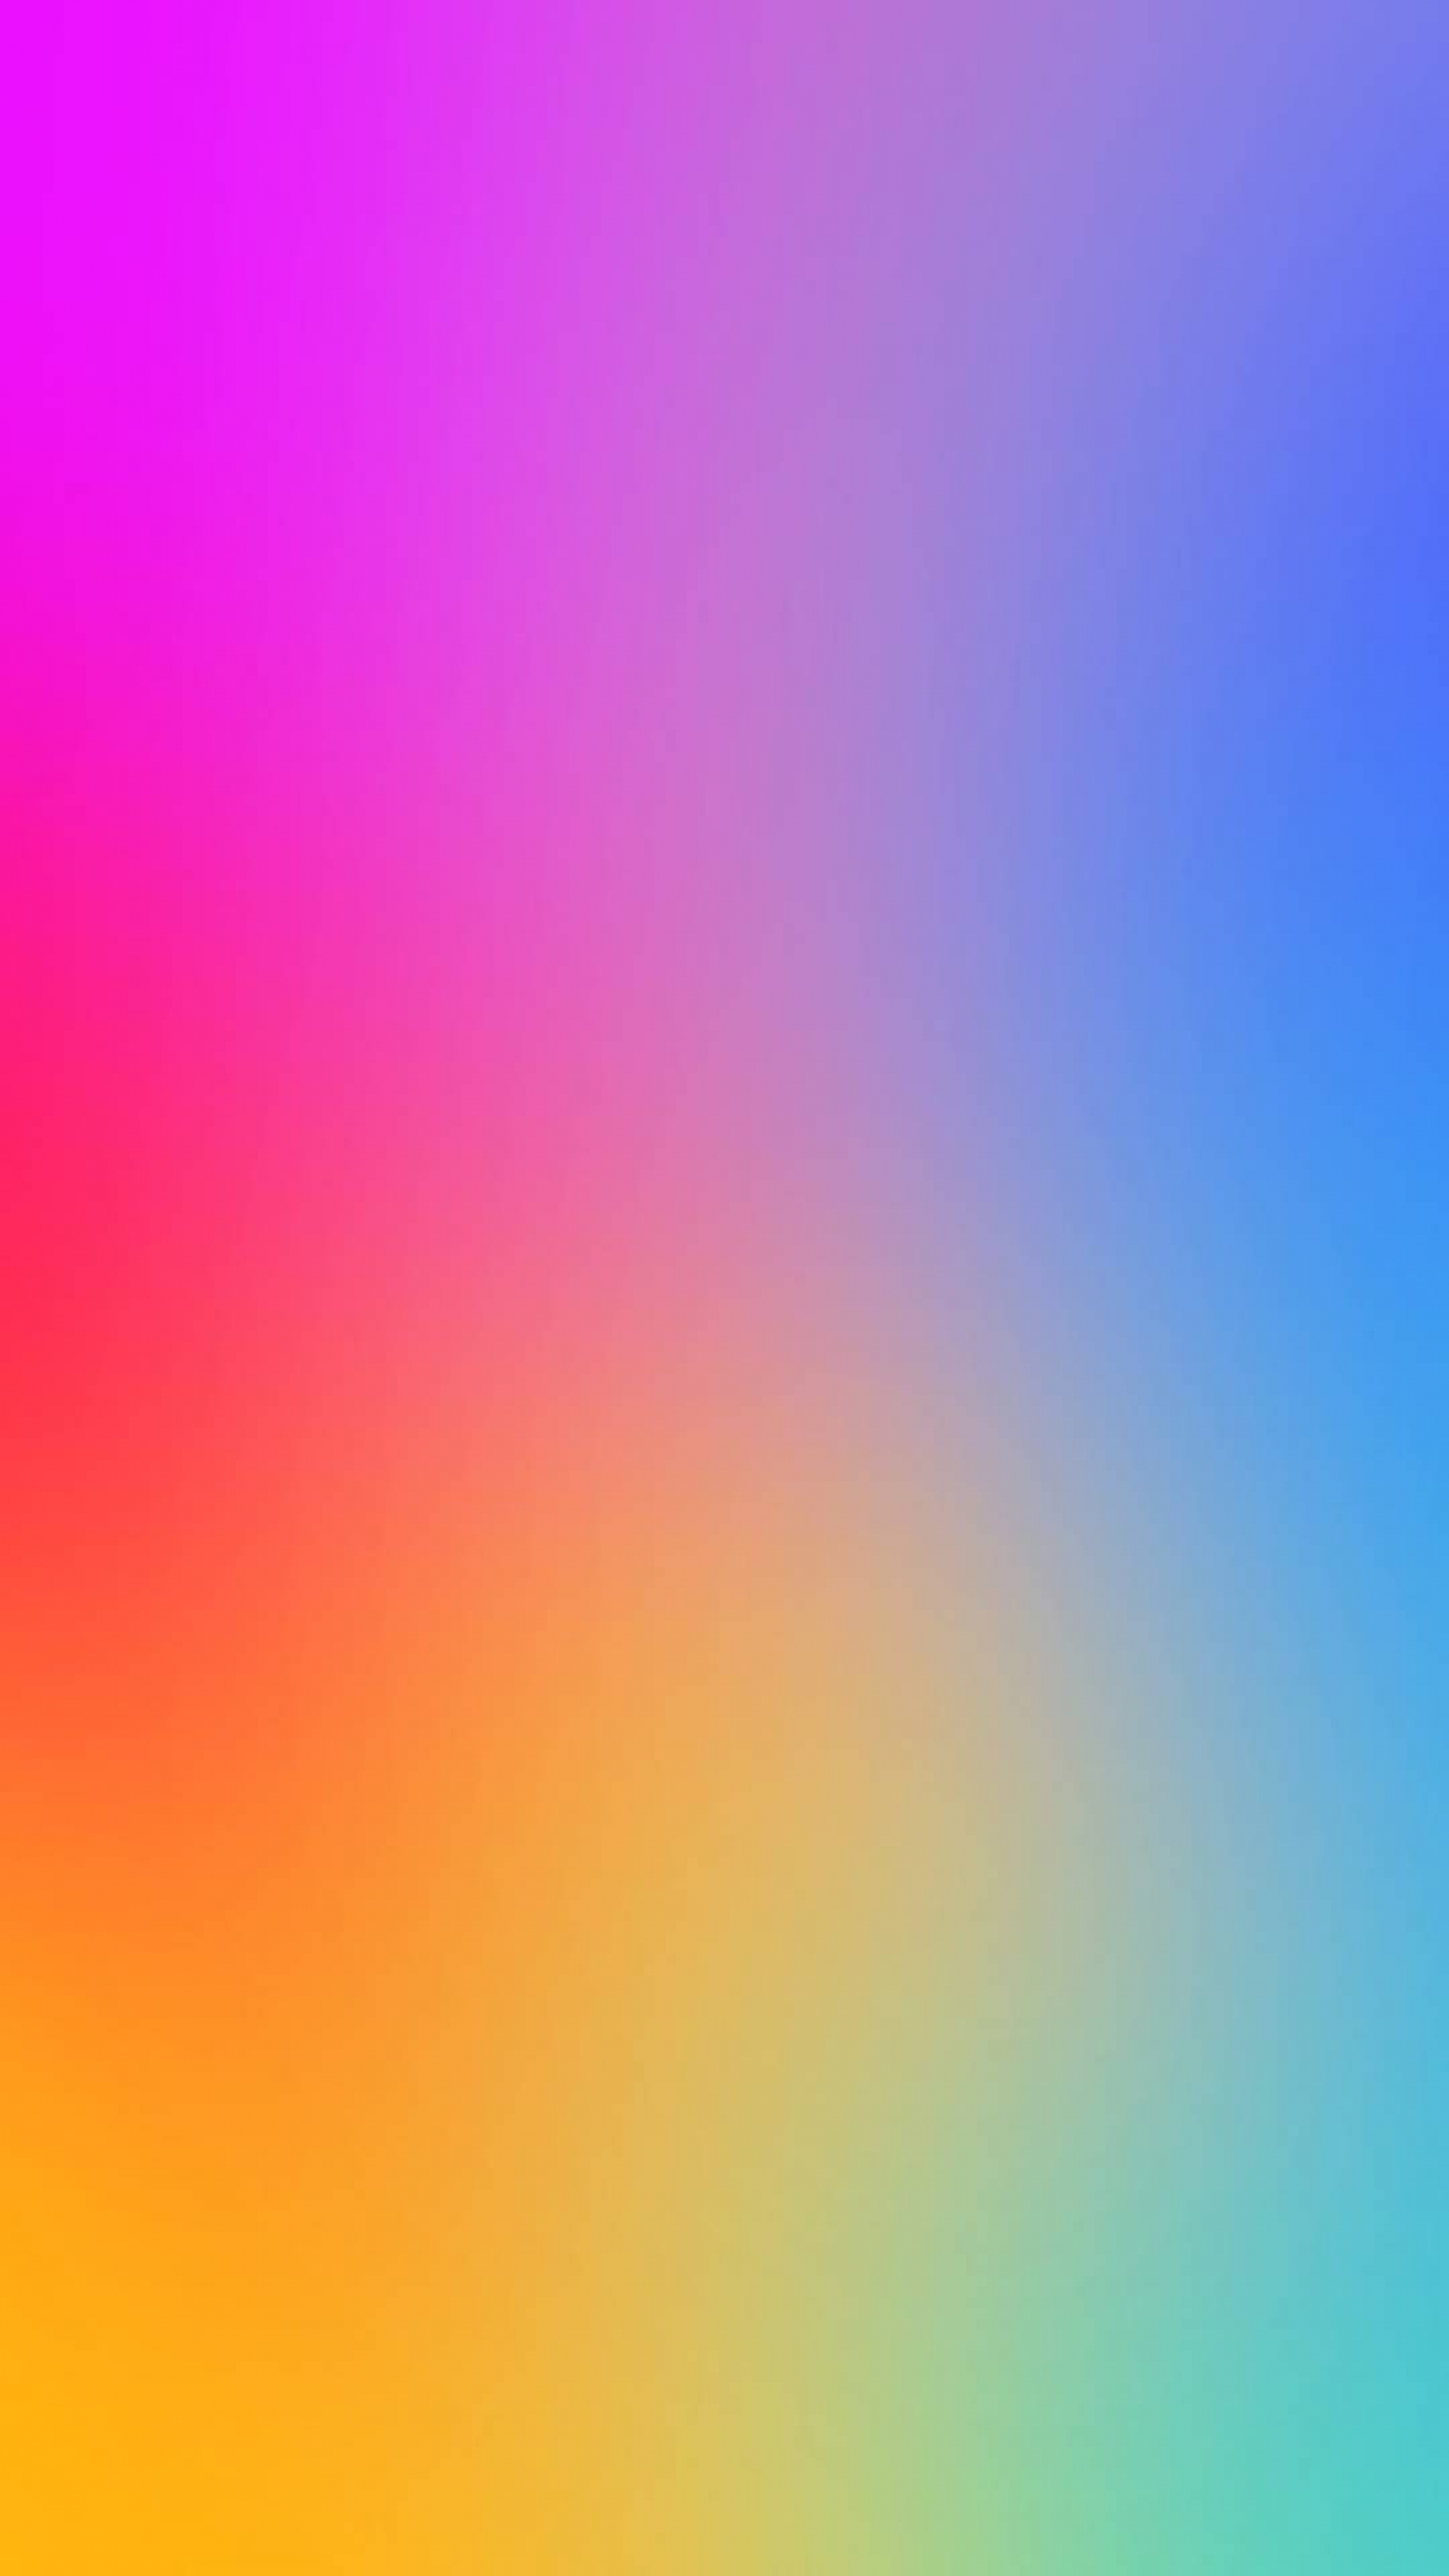 Rainbow Gradient iOS Wallpaper wallpaper for Apple iPhone, Mac, iPad and more